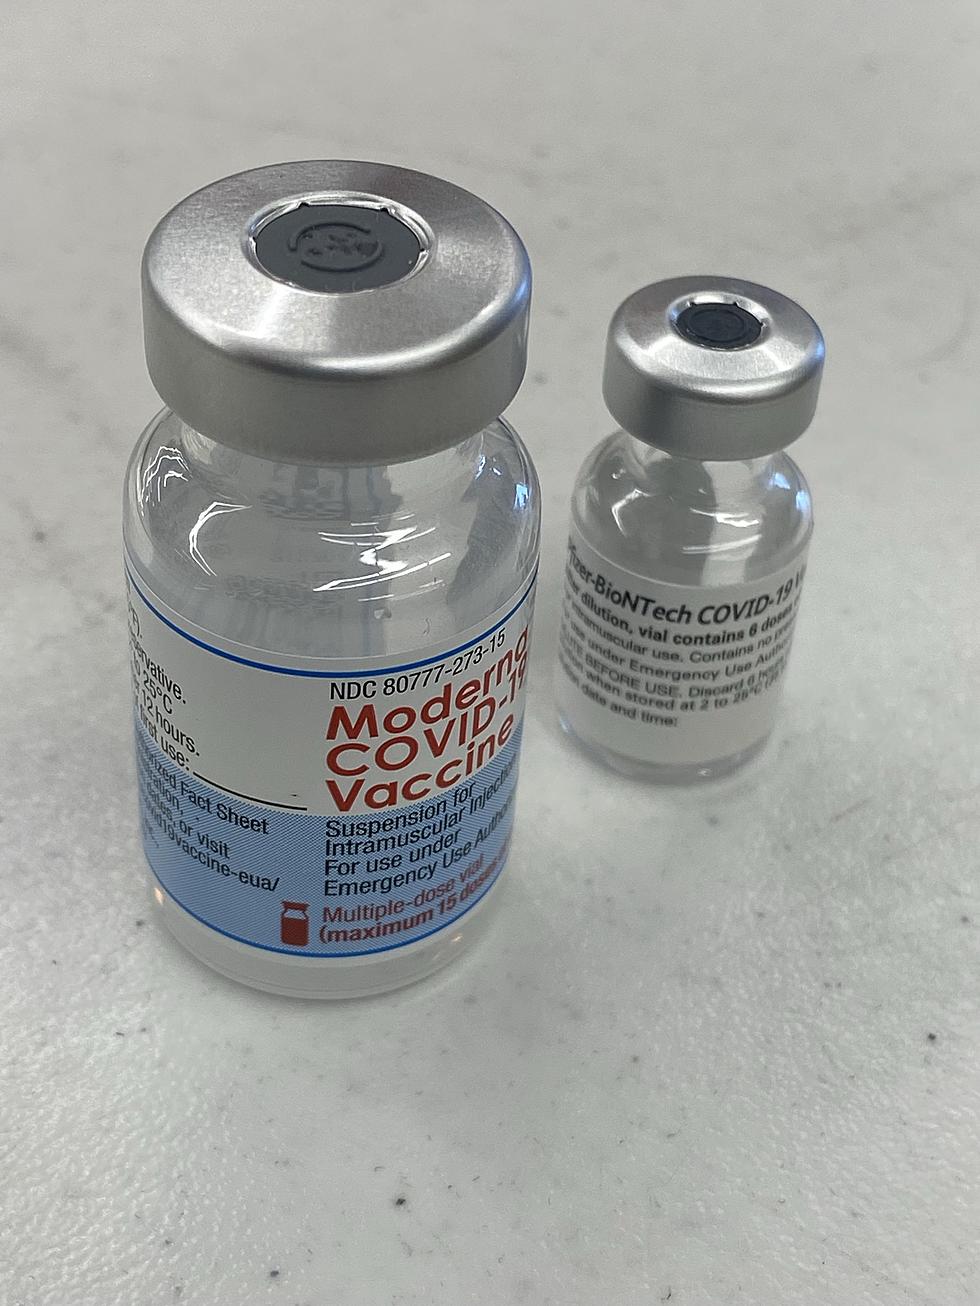 MDI Hospital Offering COVID Vaccine Clinic December 28th